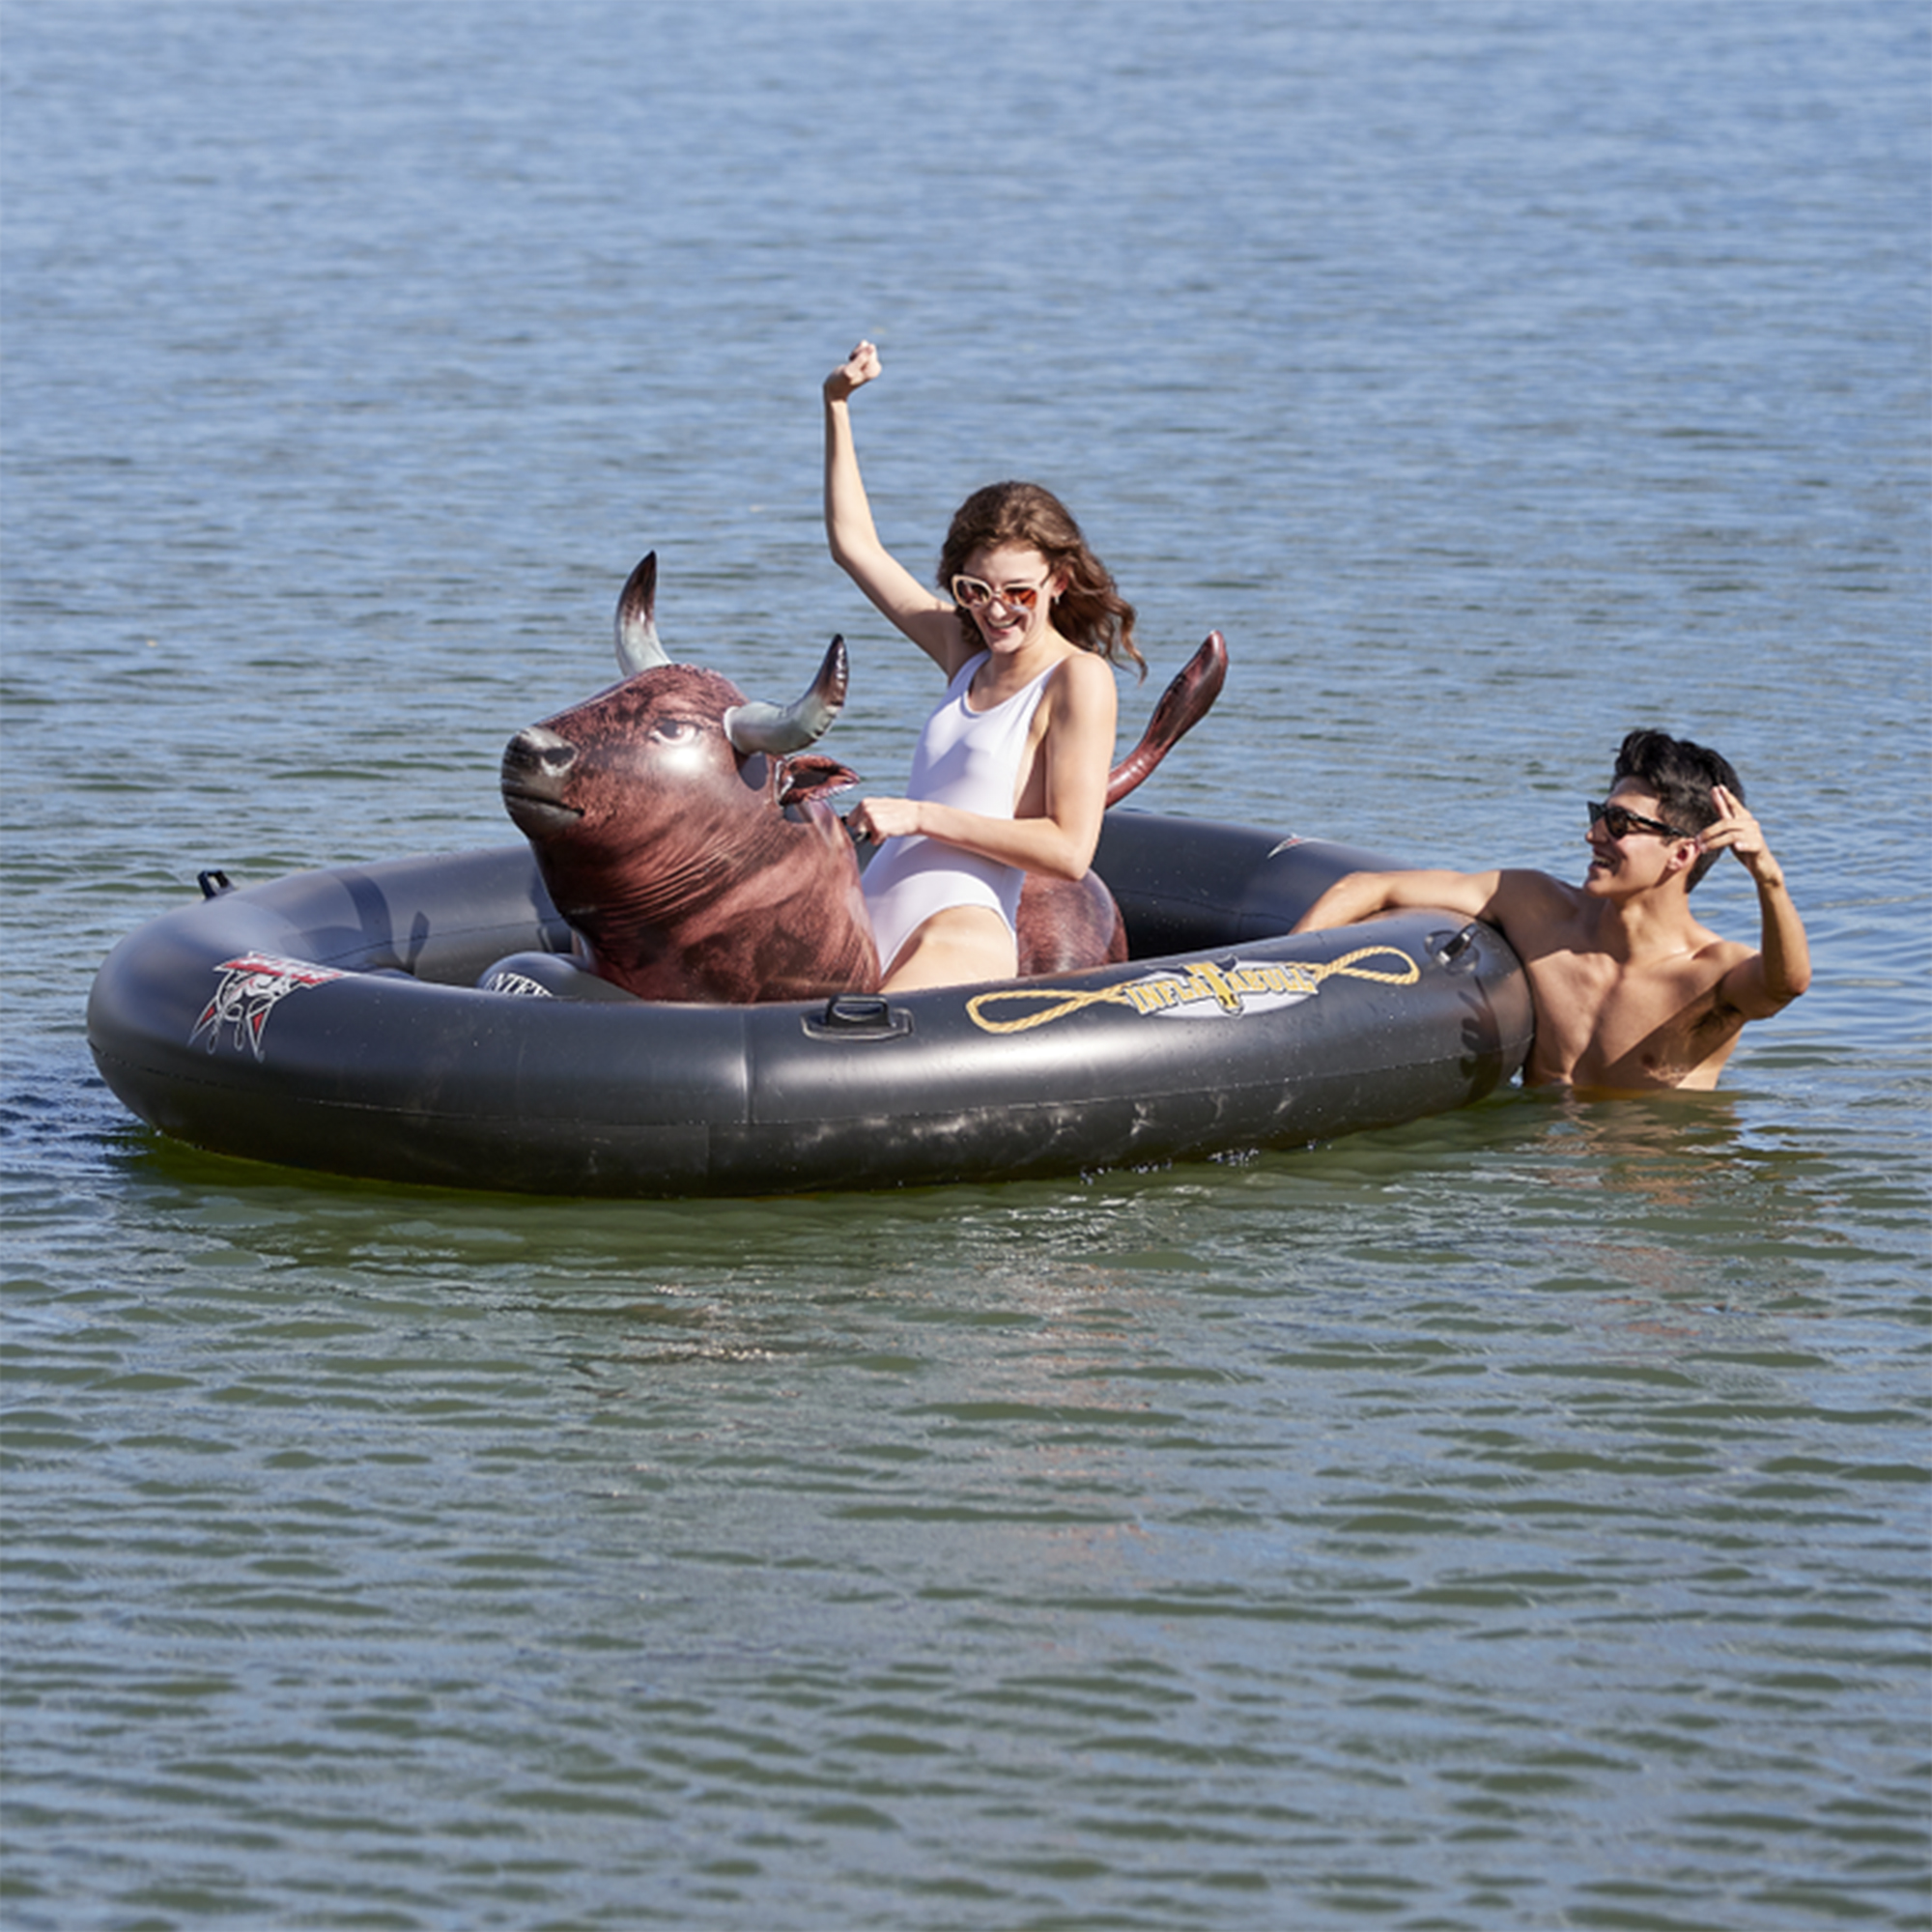 Intex PBR Inflatabull Bull-Riding Giant Inflatable Swimming Pool Lake Fun Float - image 5 of 6